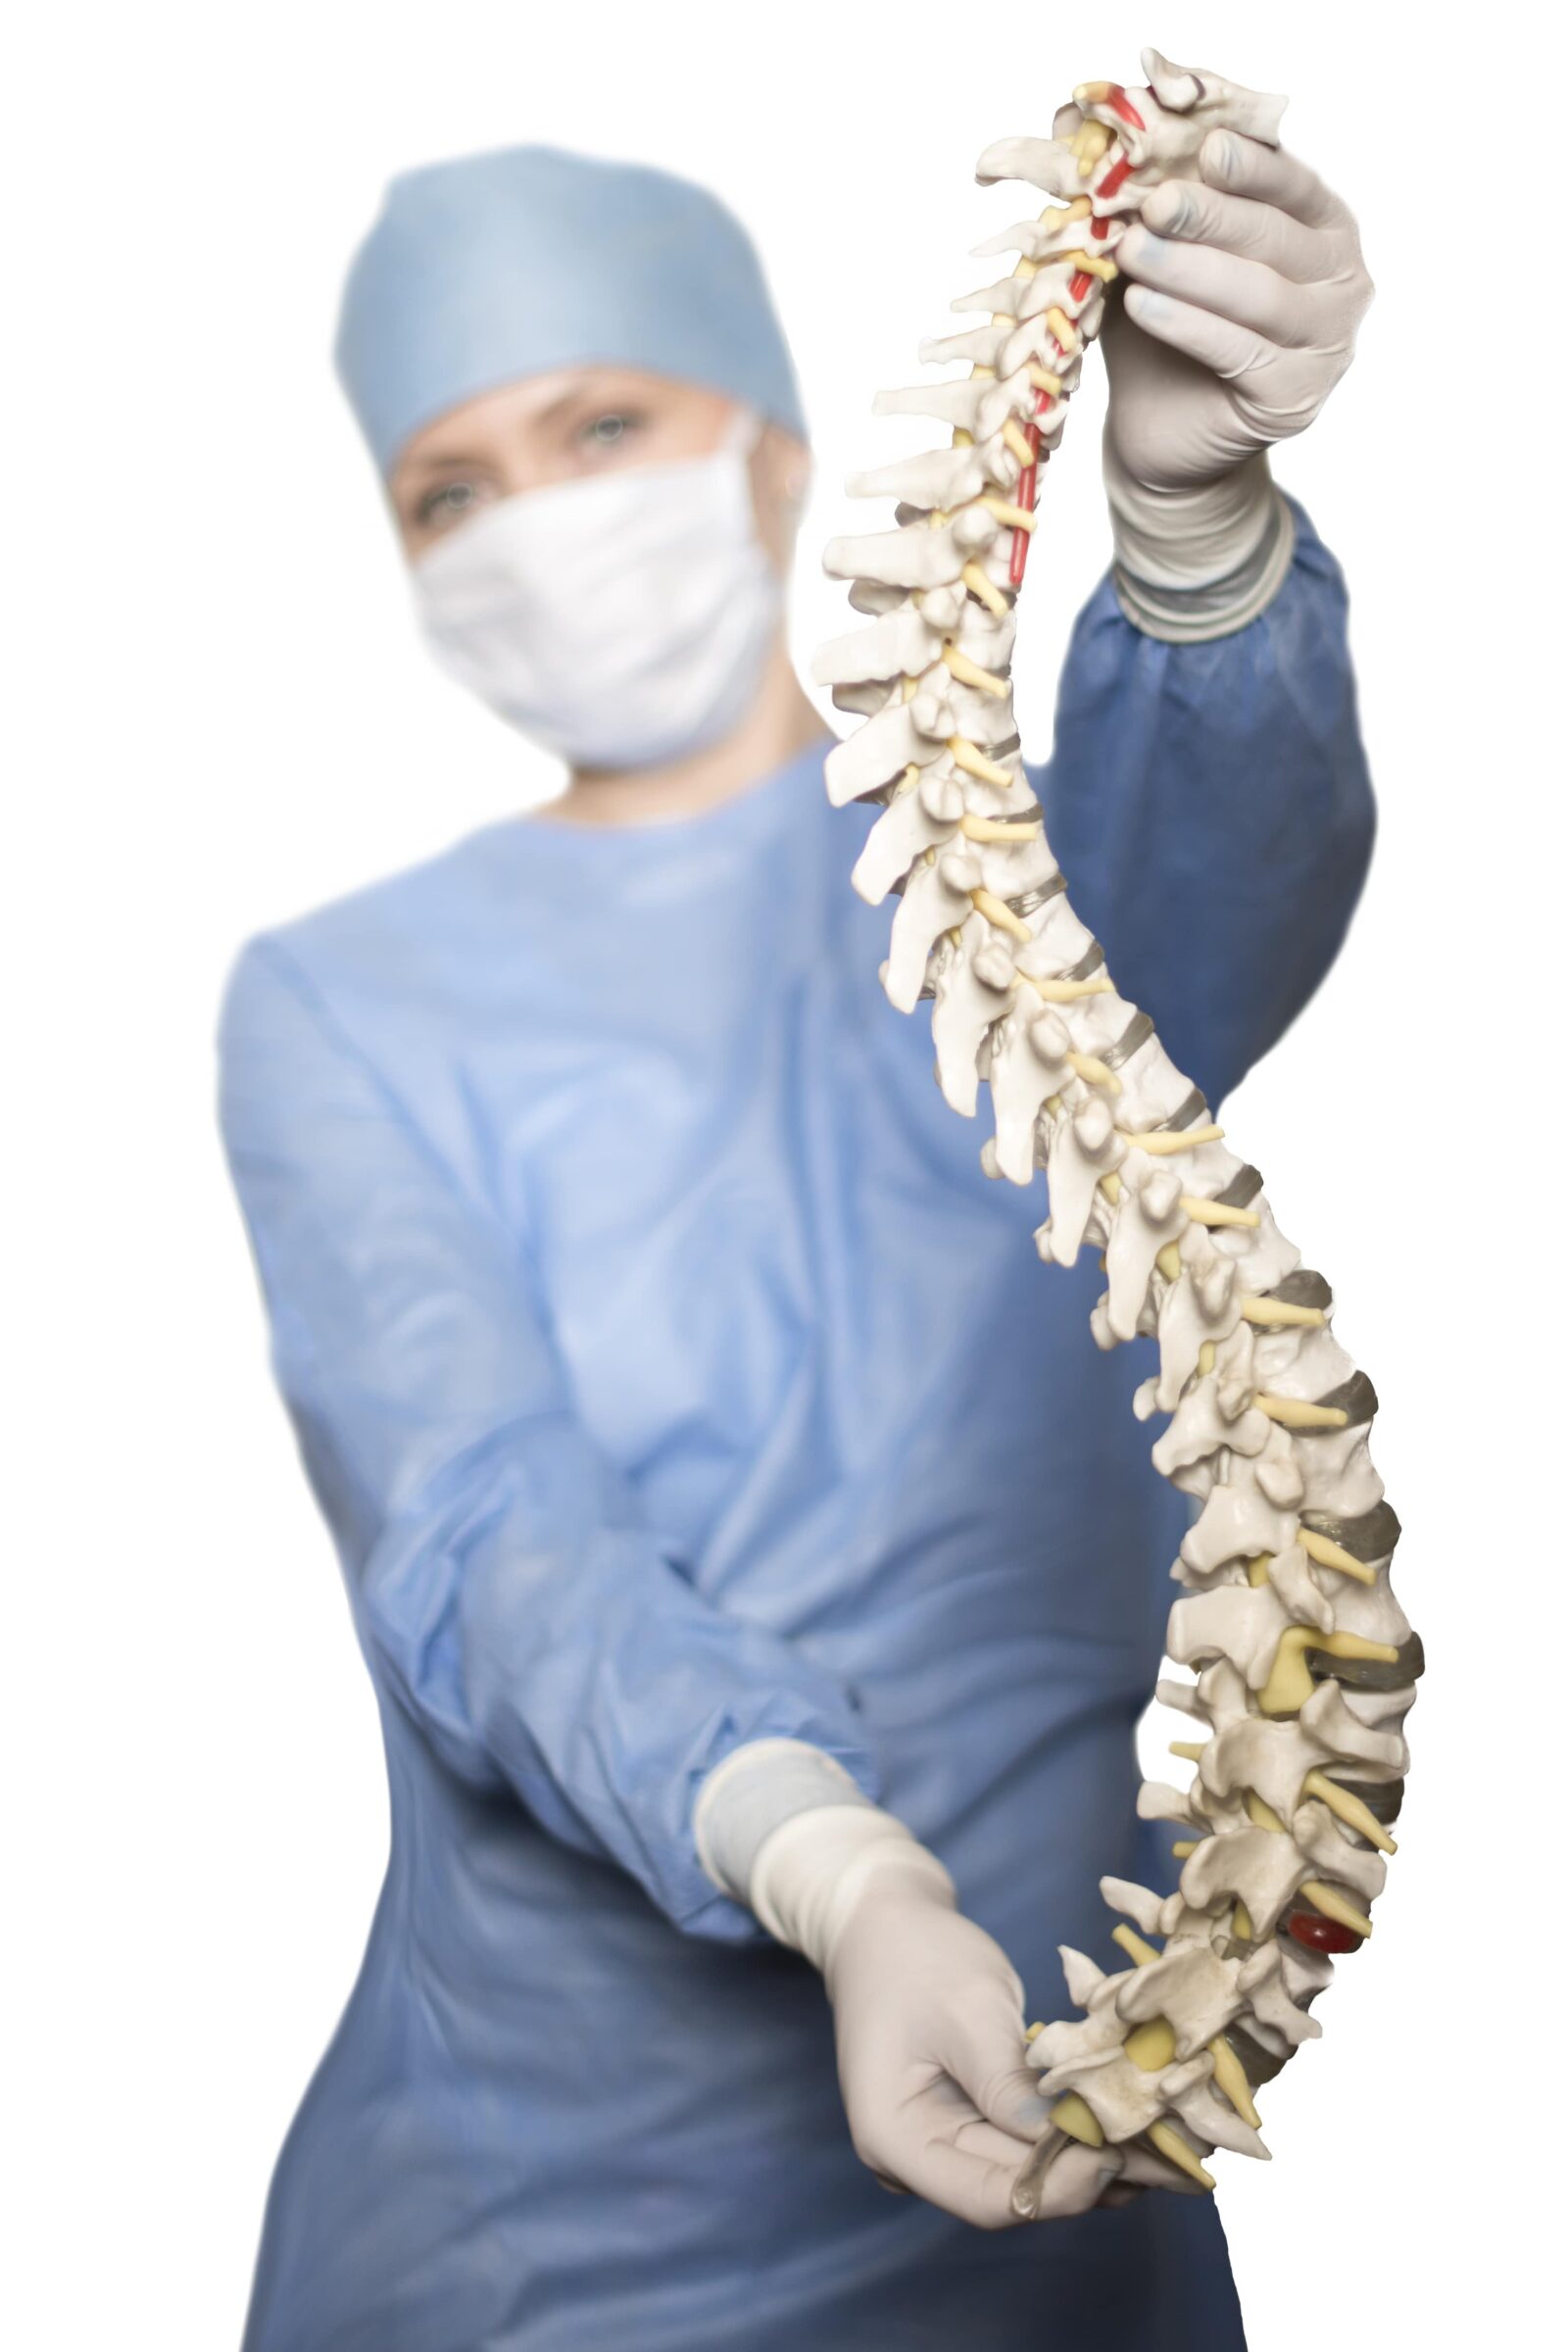 spine surgeon holding model spine